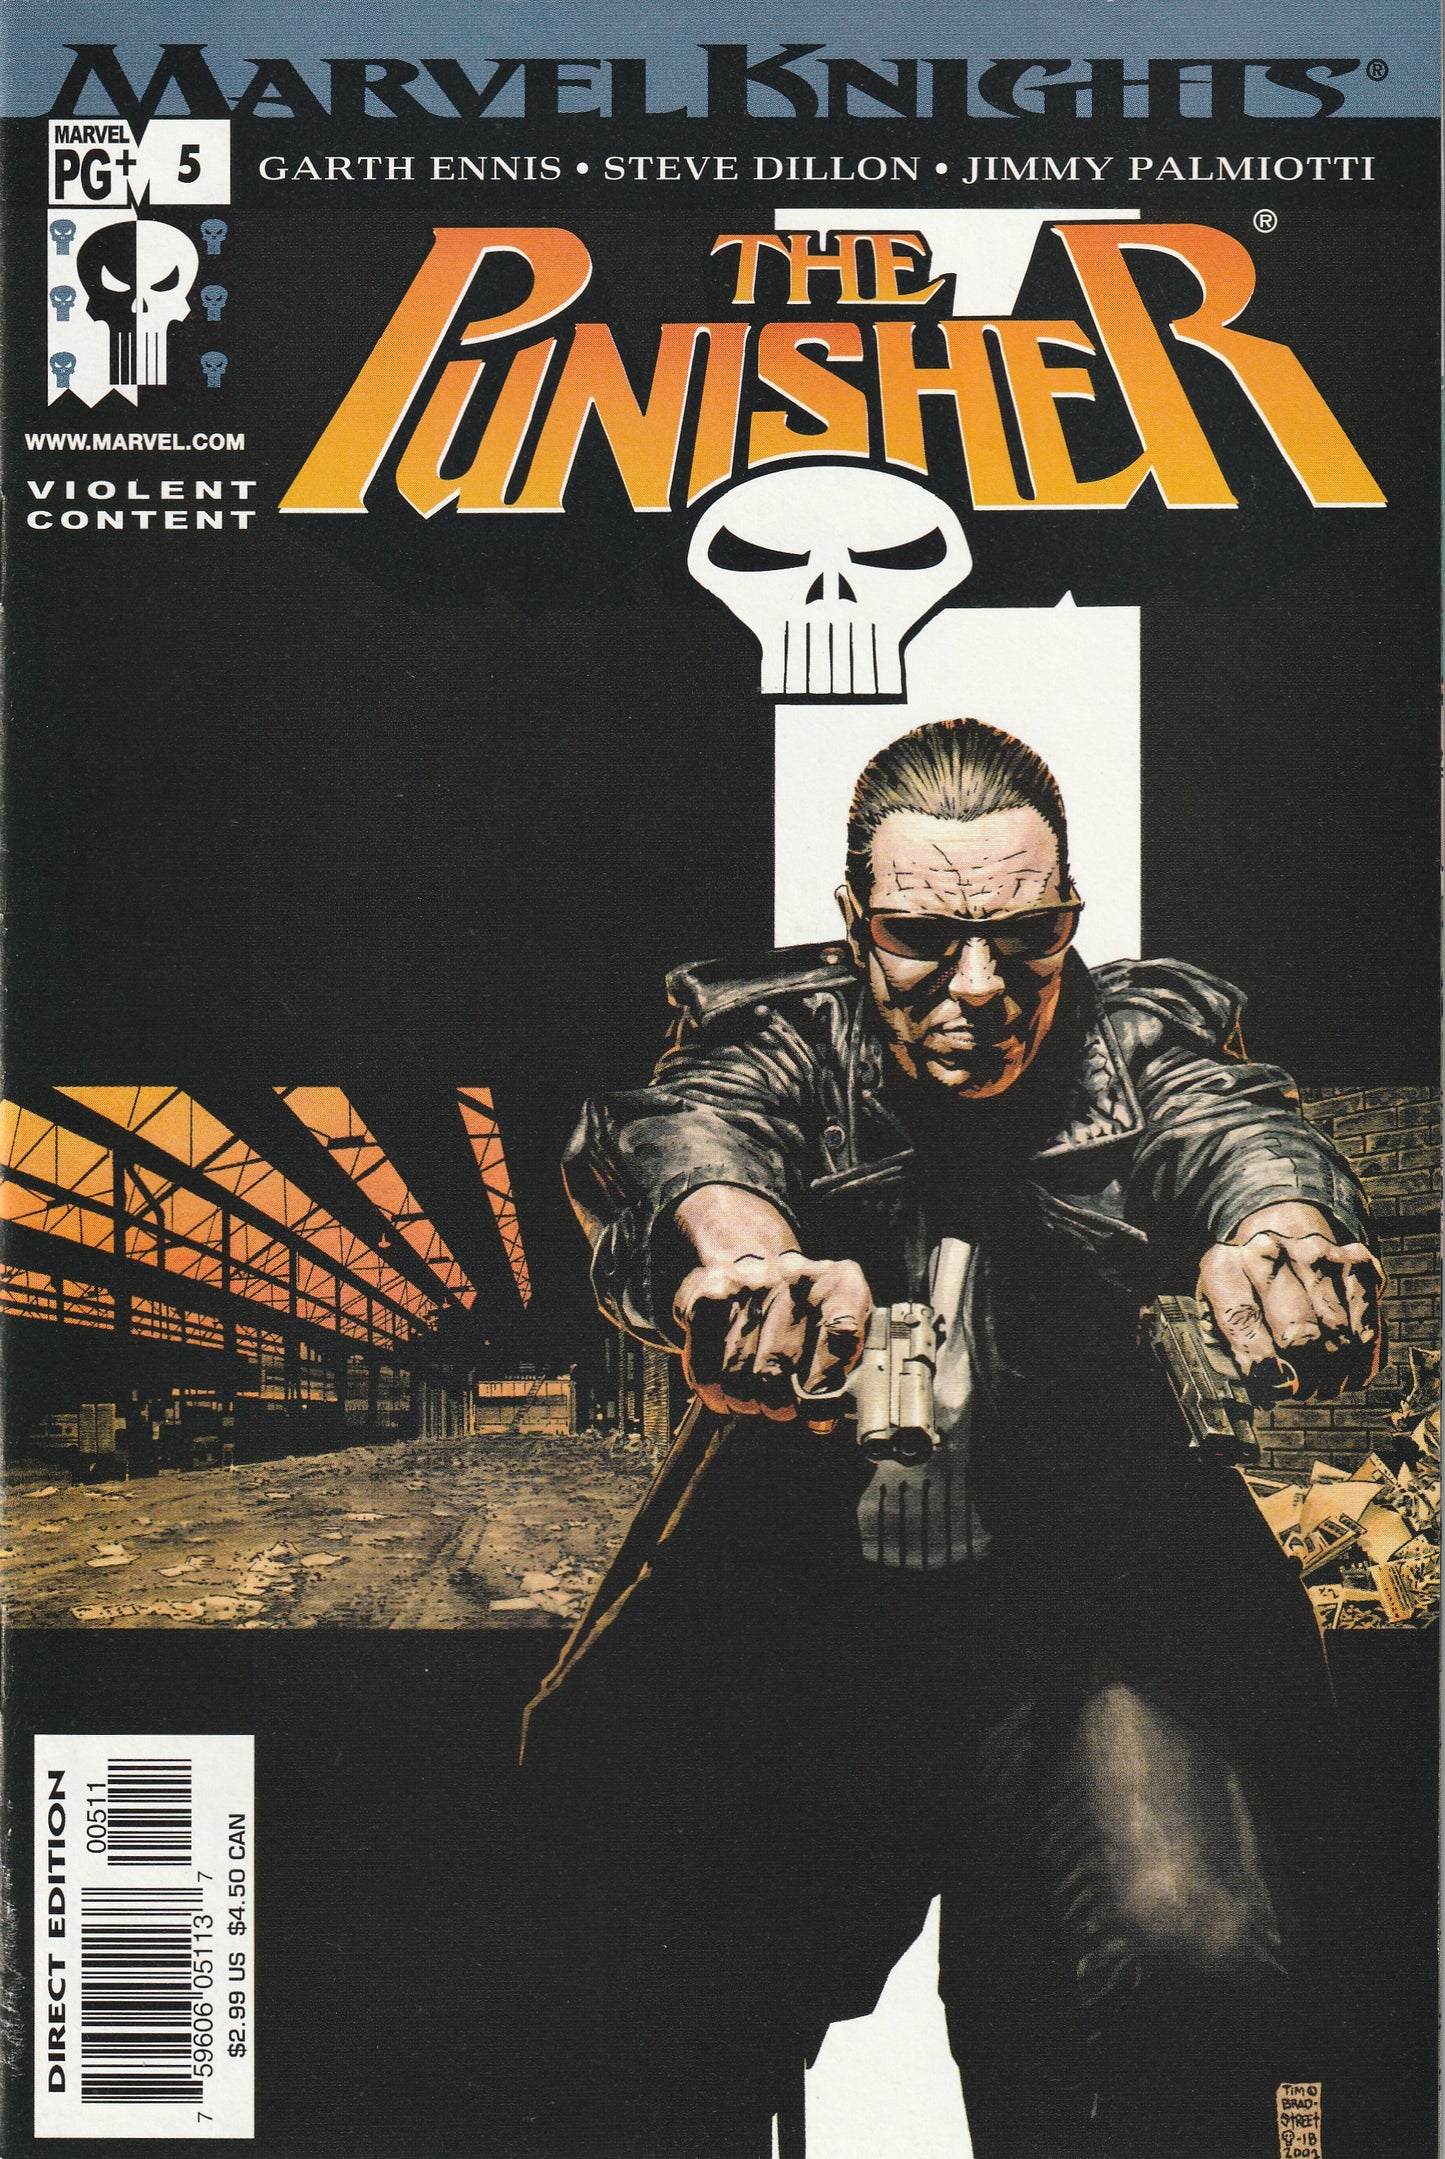 The Punisher #5 (Marvel Knights Vol 4, 2001) - Garth Ennis, Steve Dillon, Jimmy Palmiotti